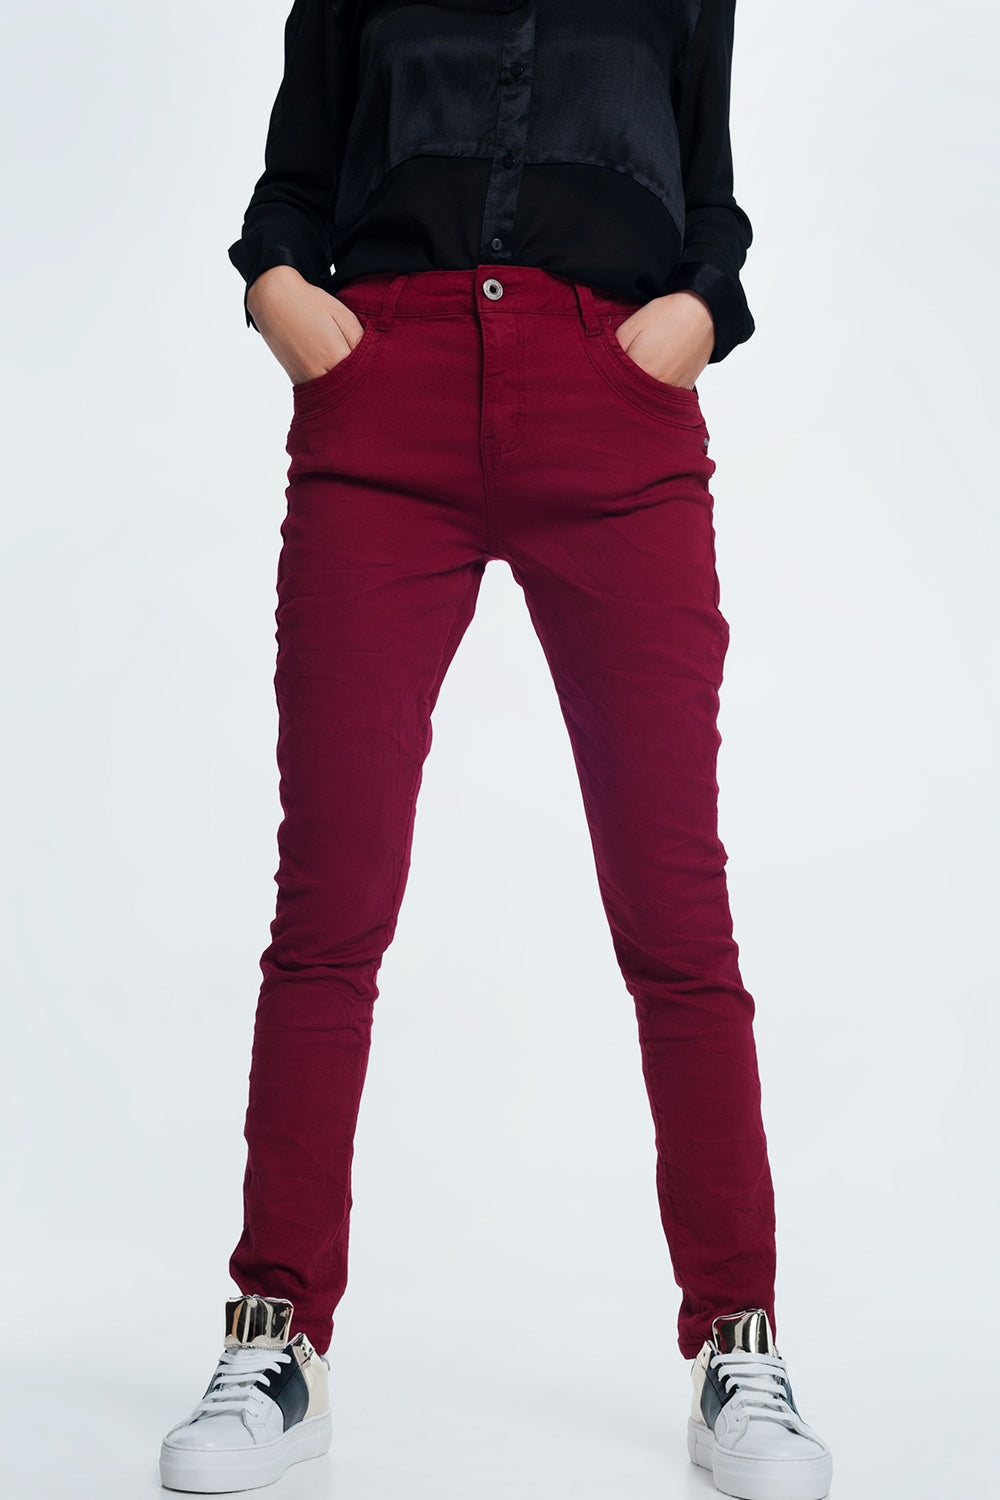 Drop crotch skinny jean in maroon